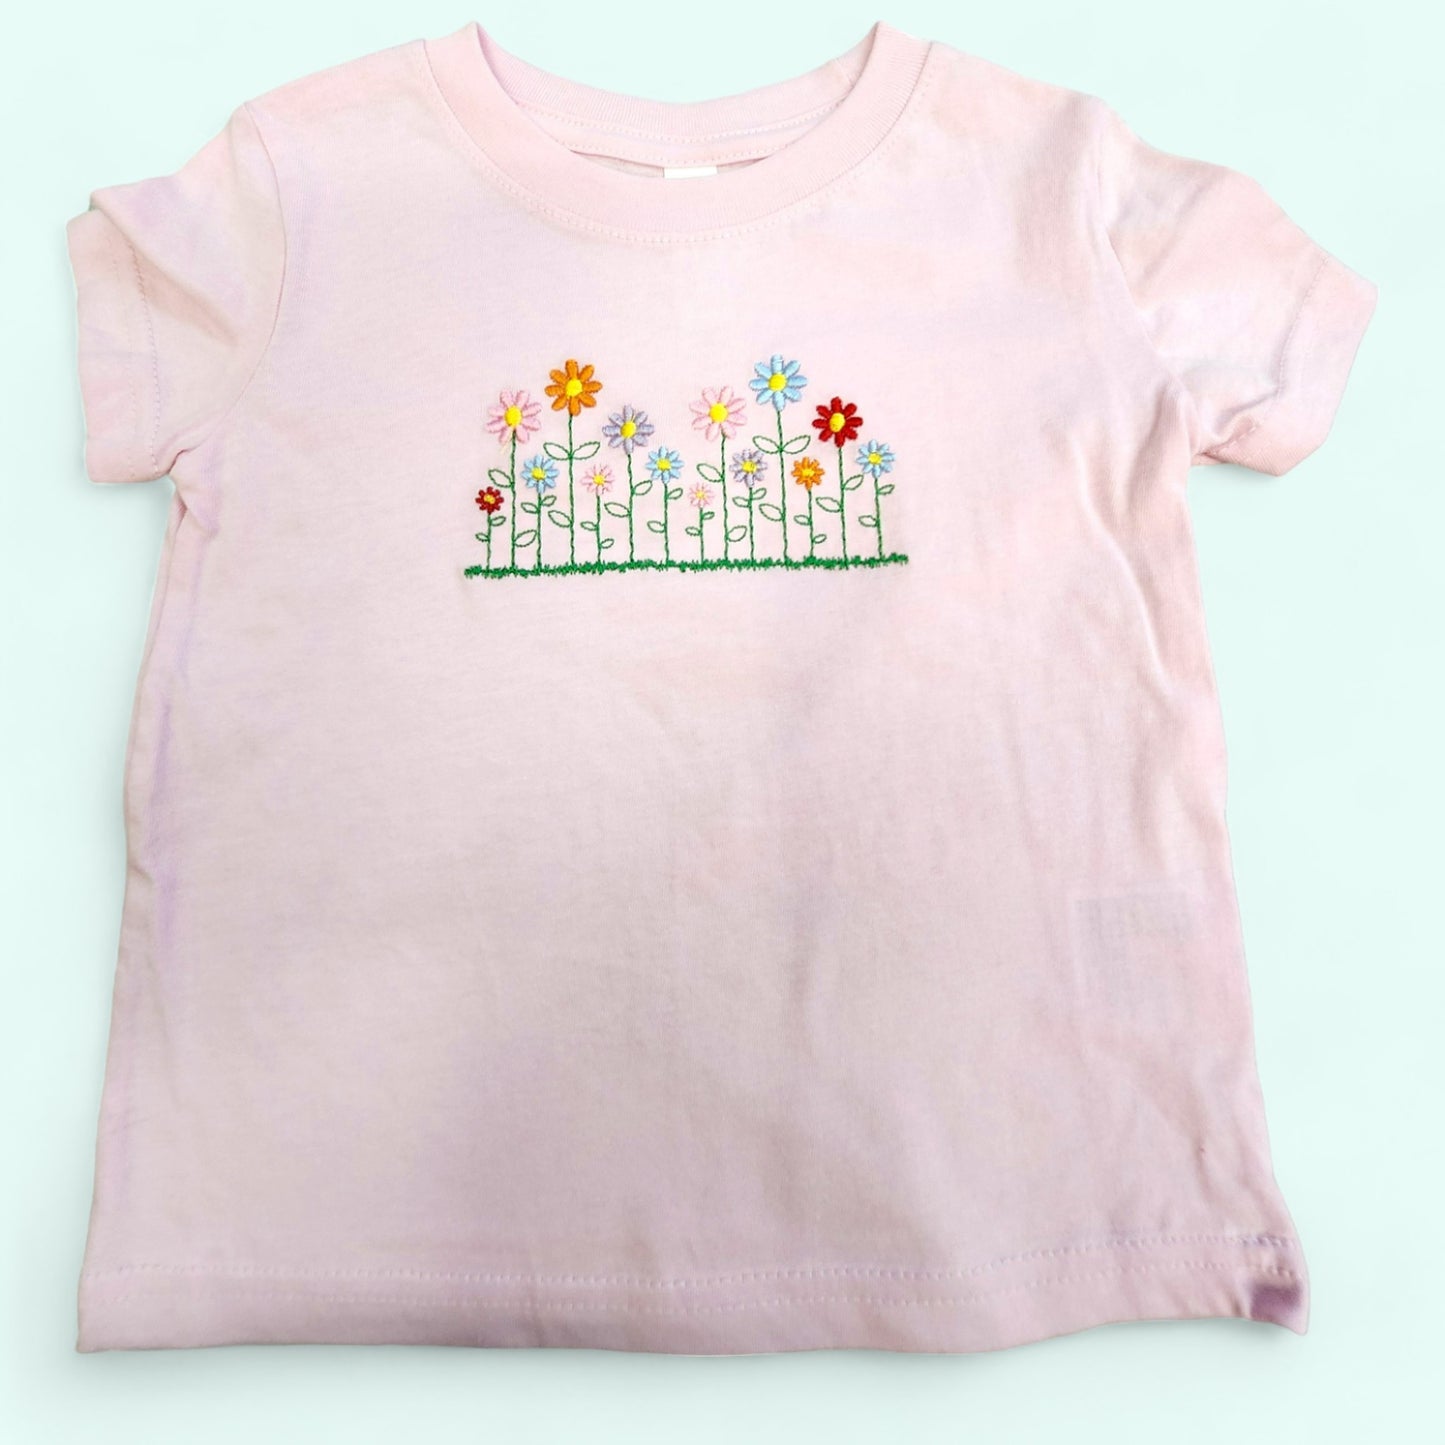 Wild flowers baby girl shirt, Toddler wild flowers pink shirt, Personalized girls flower shirt, Girls shirts